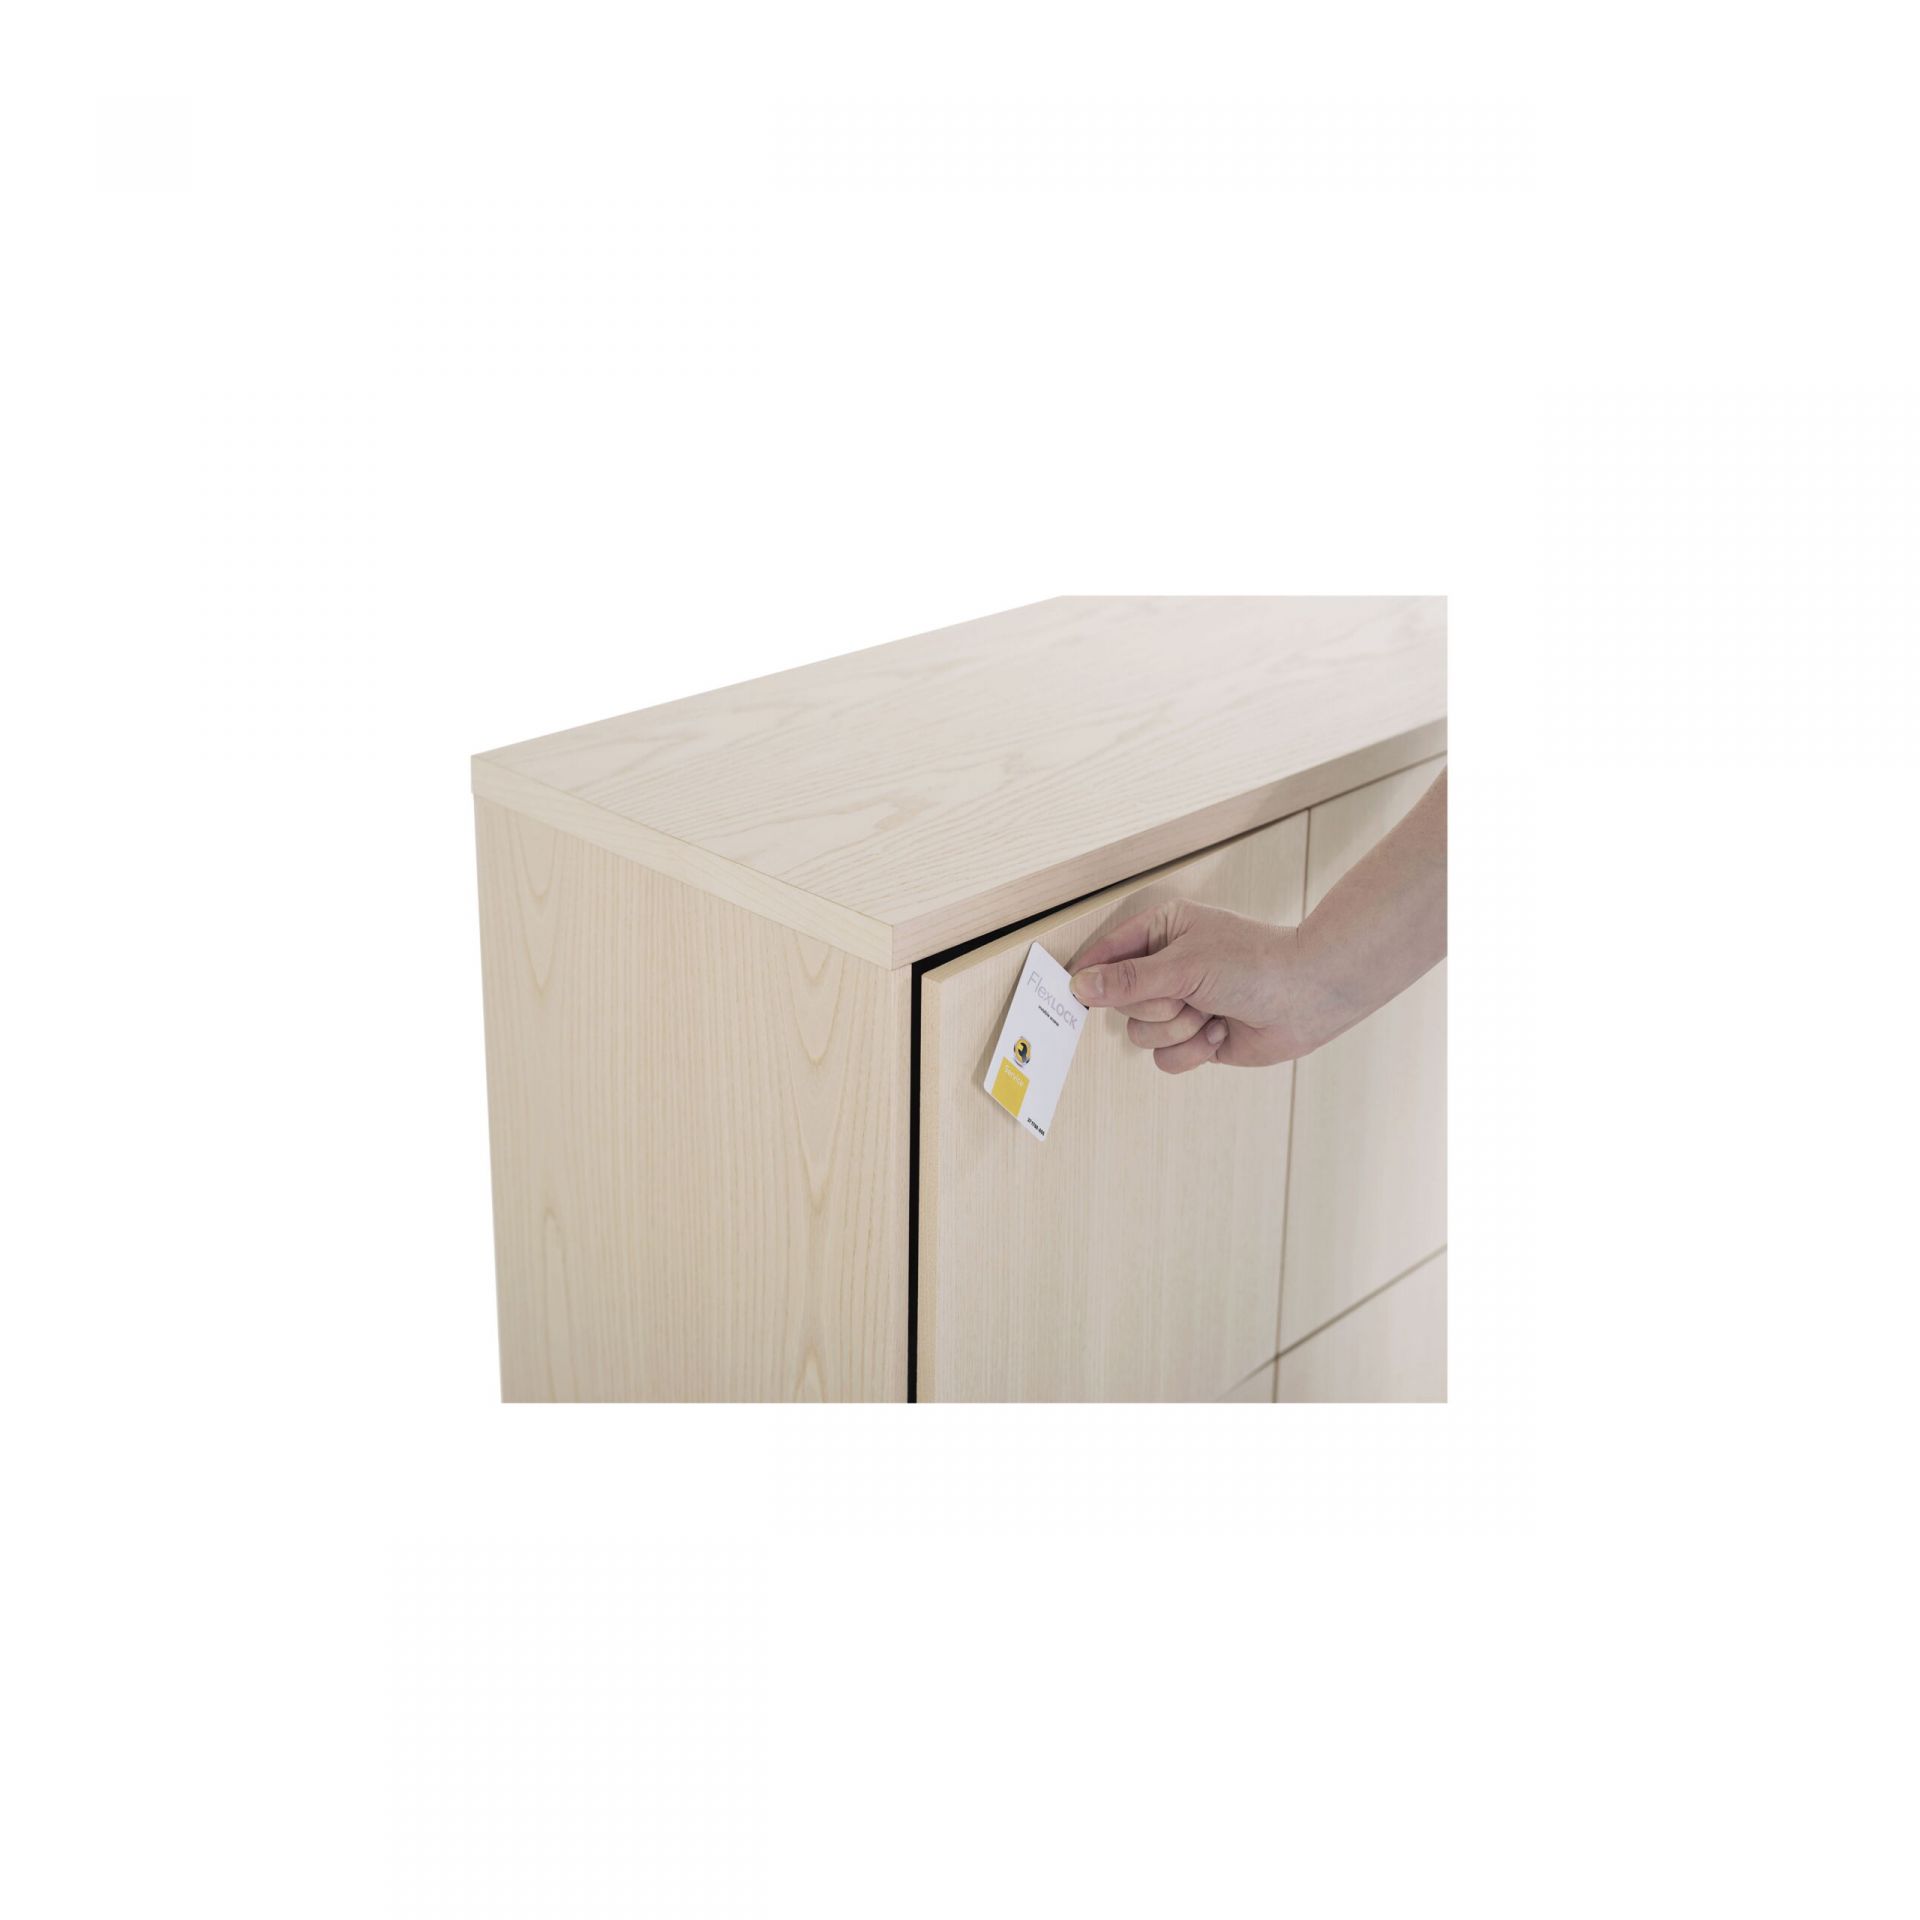 Pulse Personal locker product image 6